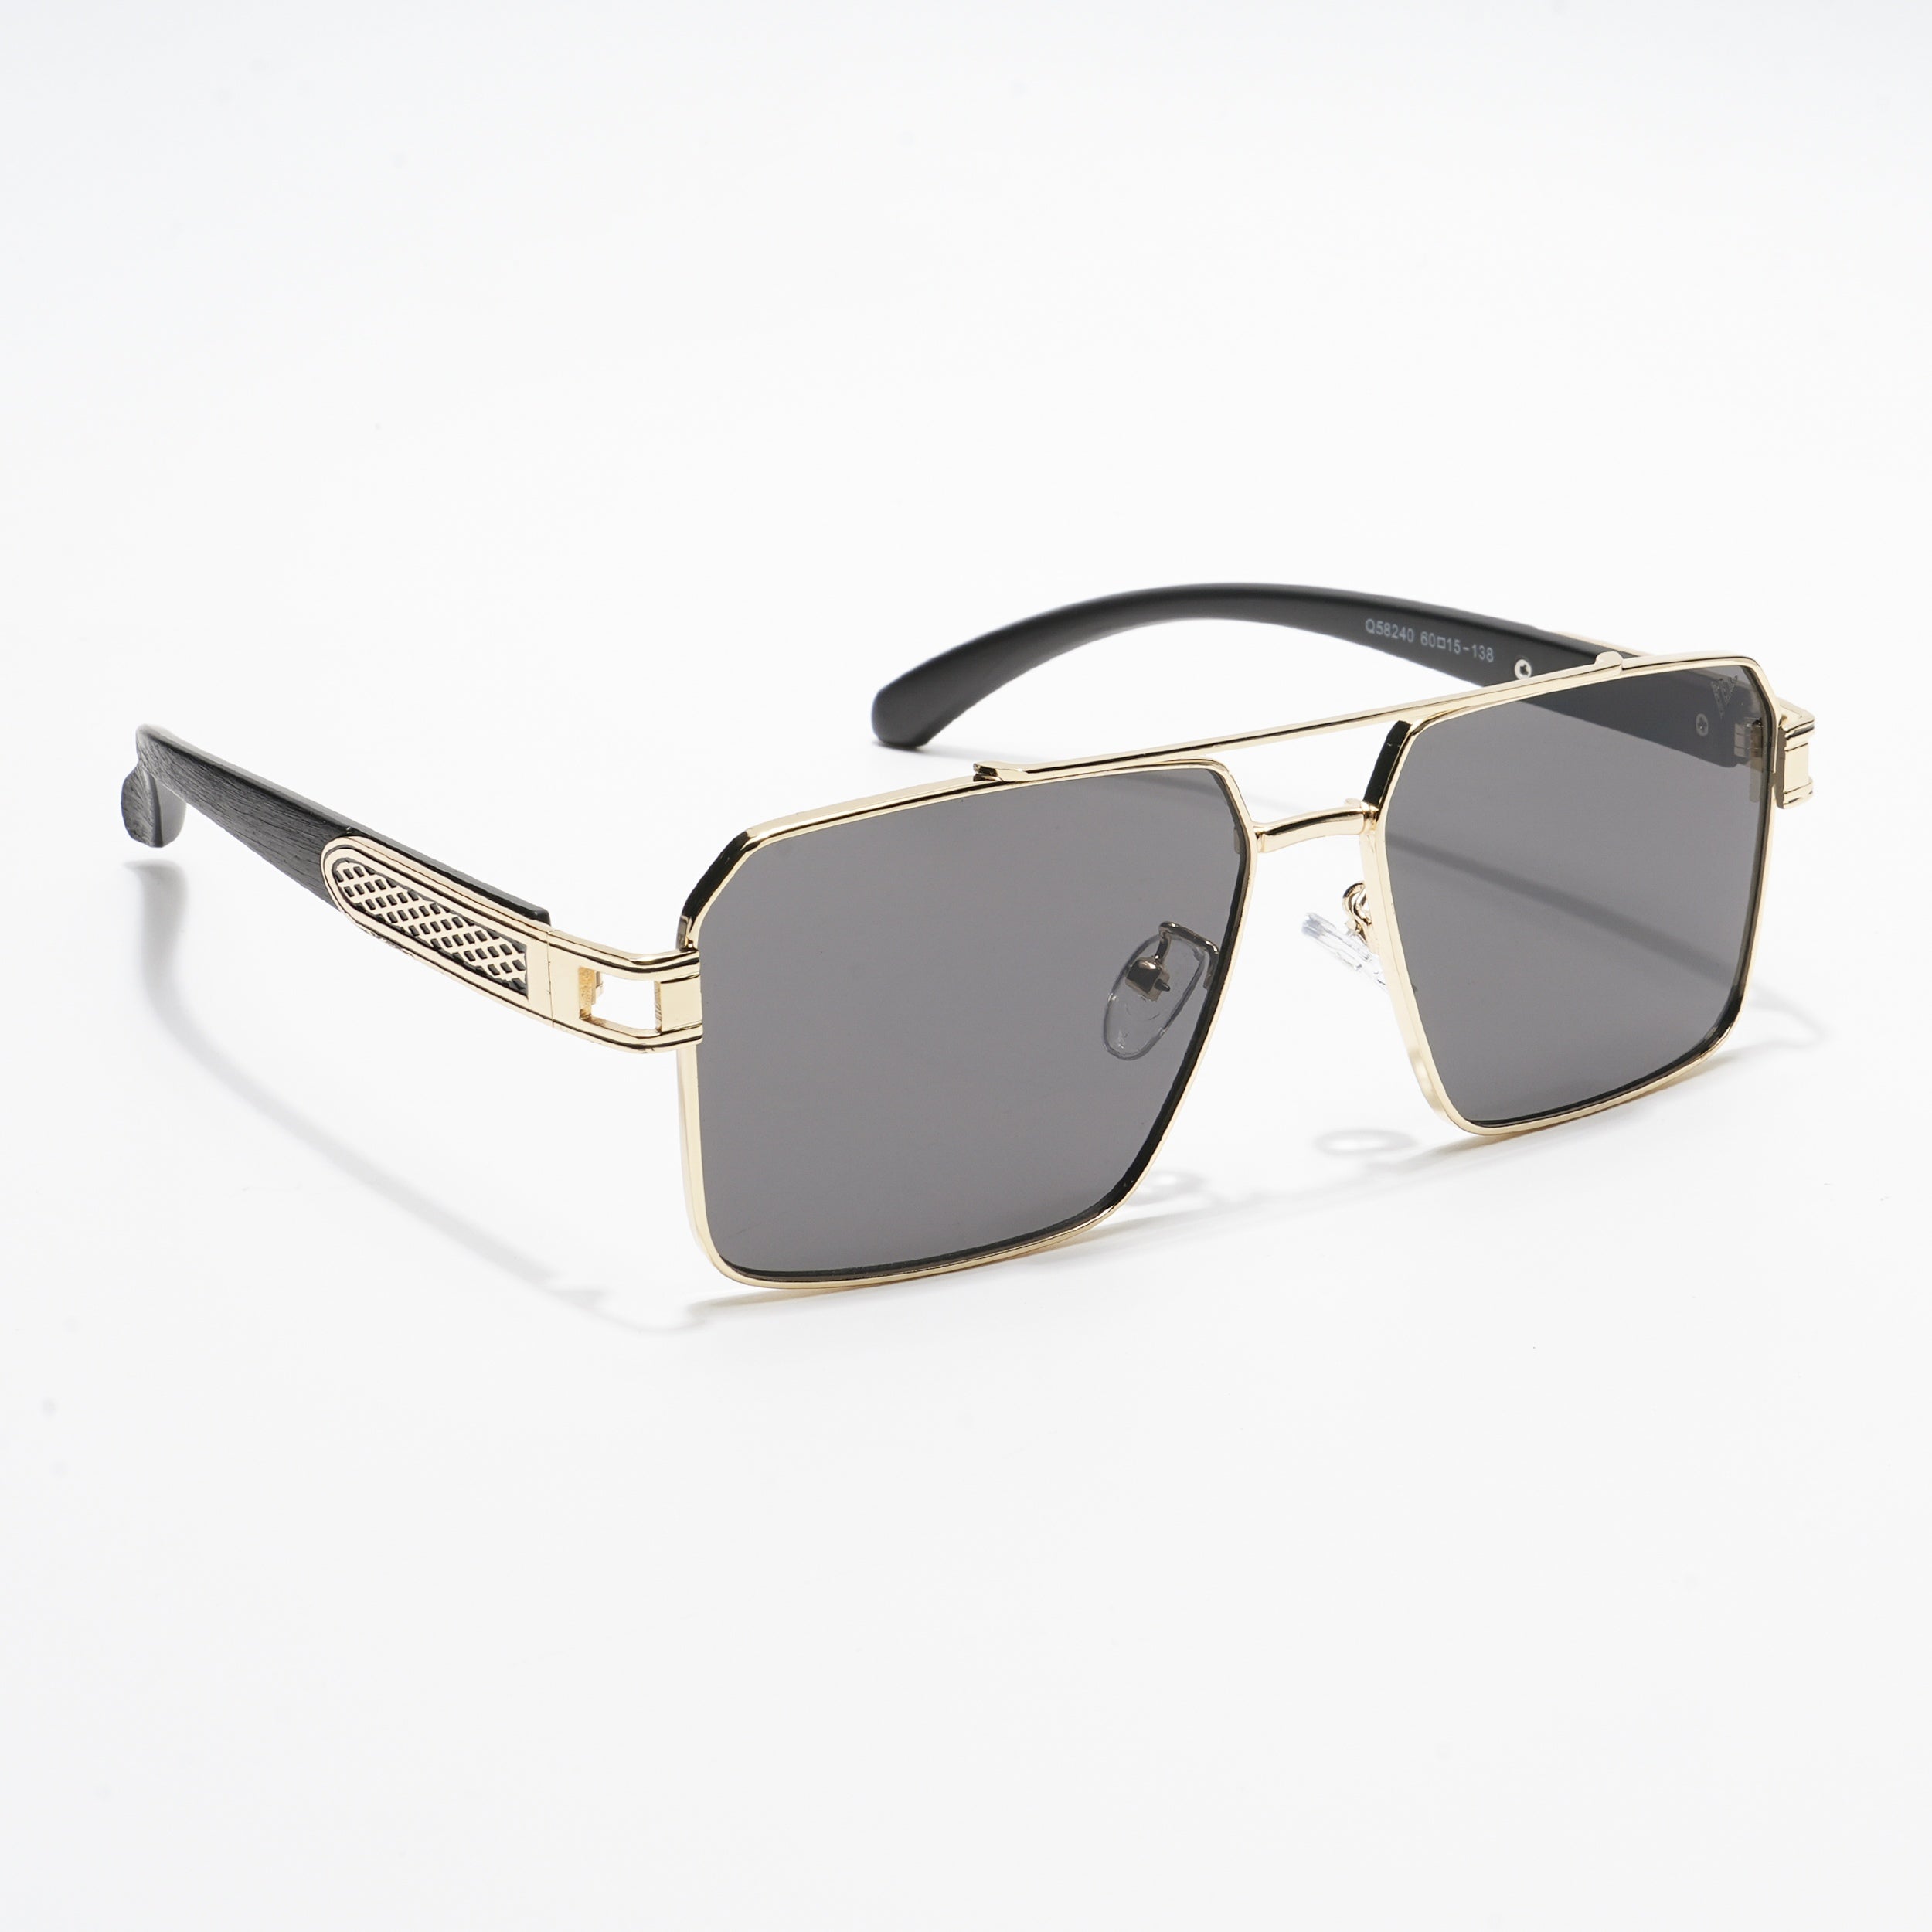 Voyage Black Wayfarer Sunglasses for Men & Women - MG4209